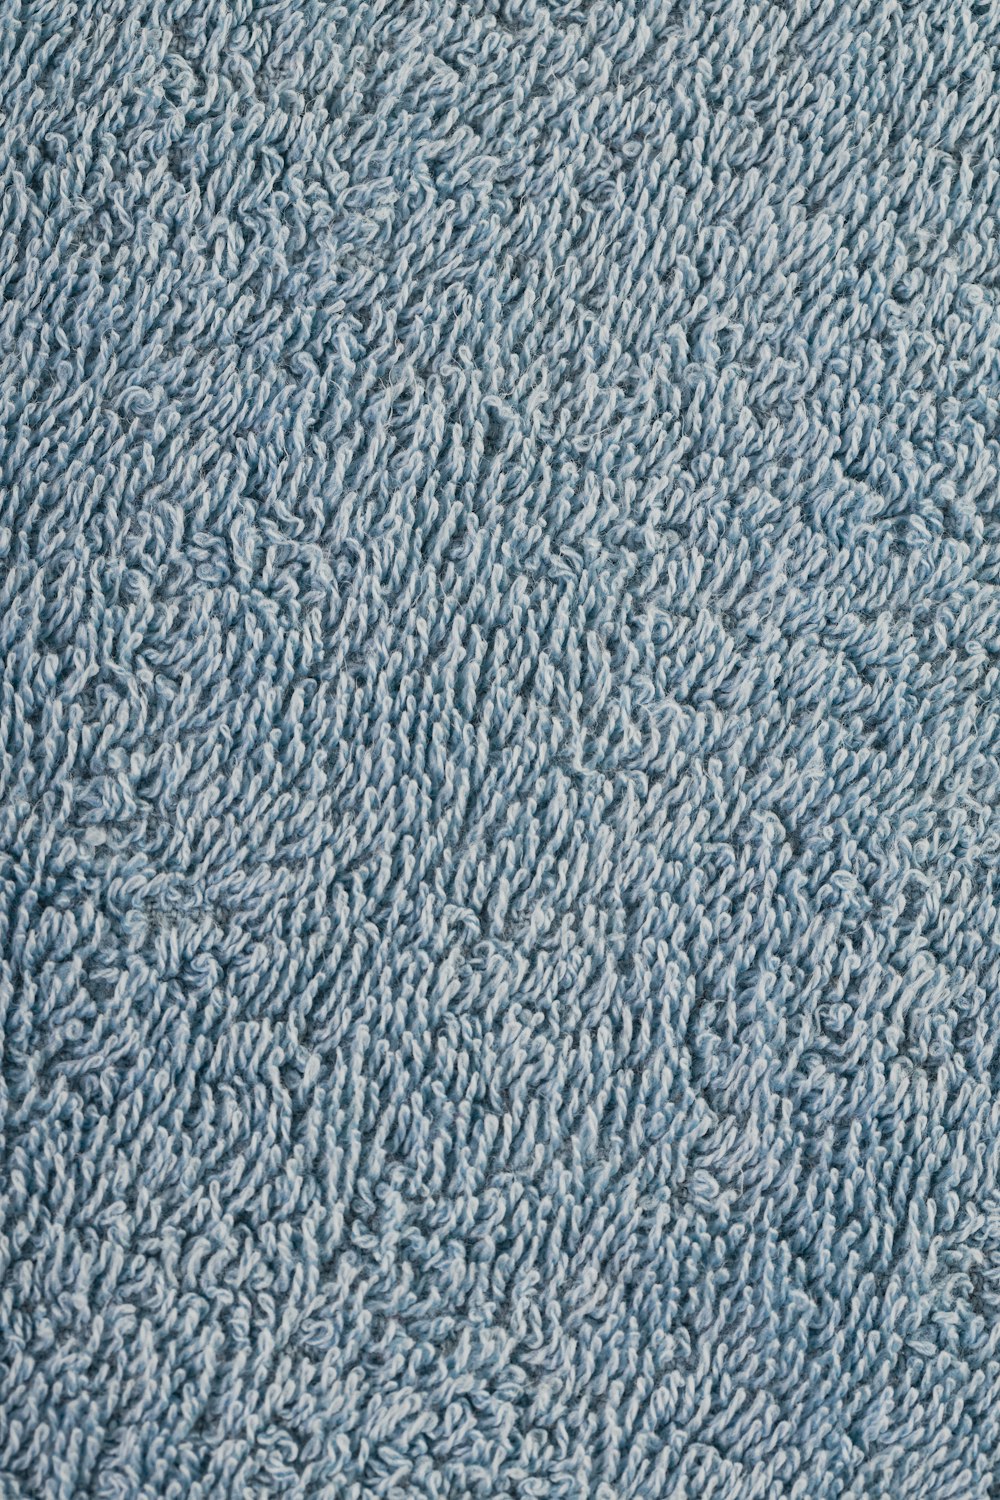 Un primer plano de la textura de una alfombra azul